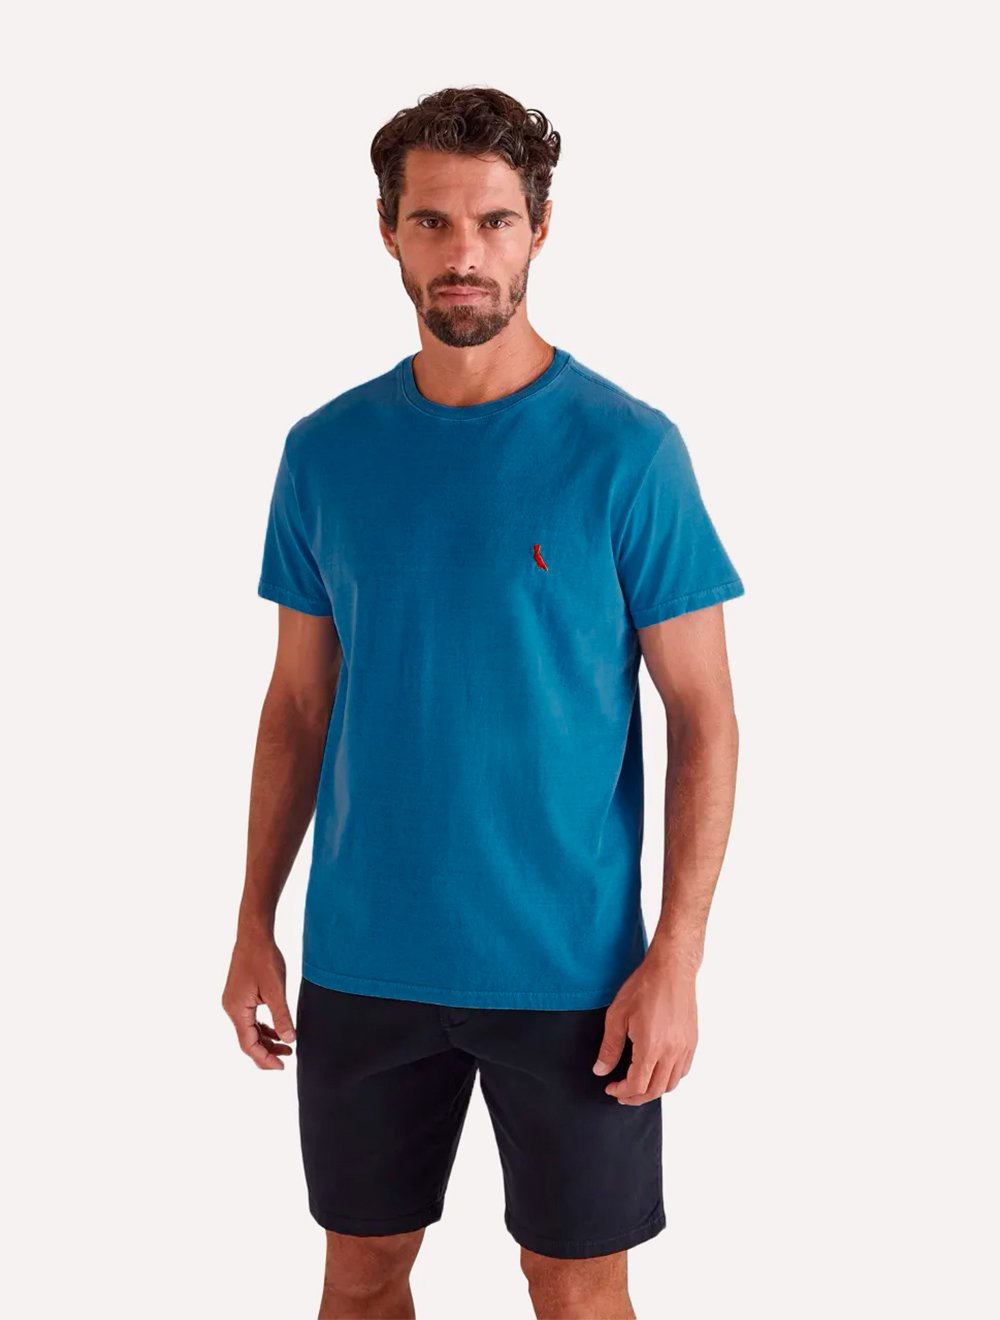 Camiseta Reserva Masculina Básica Brasa Red Stoned Azul Médio